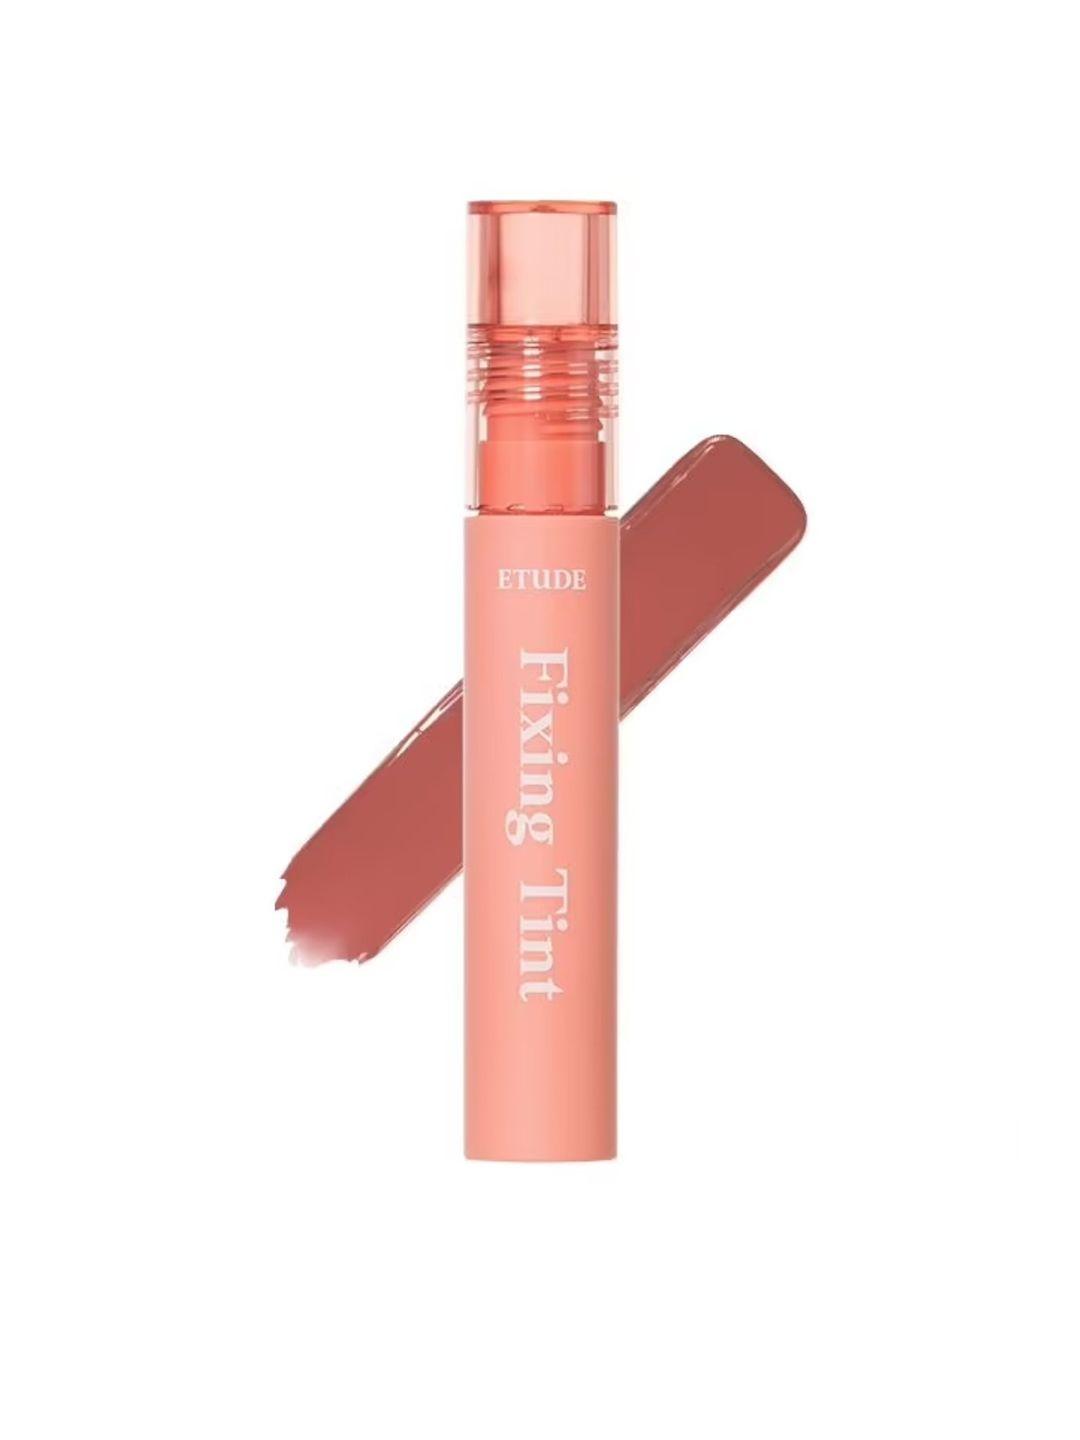 etude fixing tint hydrating matte finish lipstick - mellow peach 03